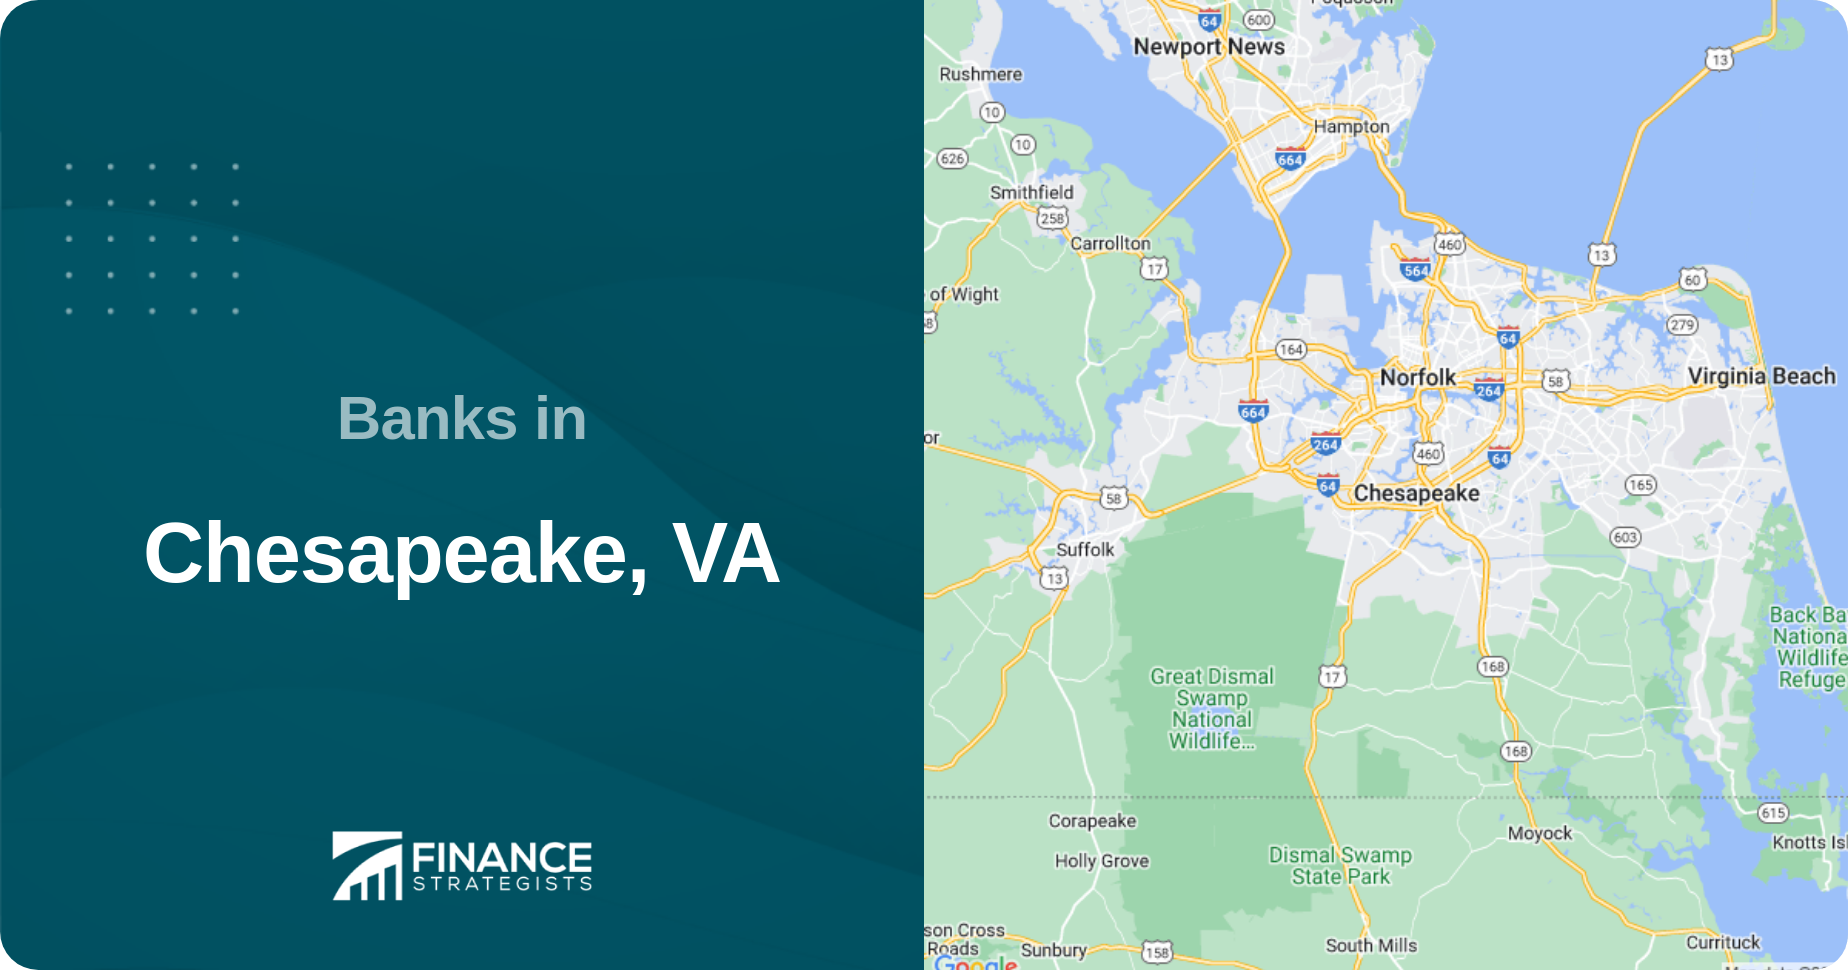 Banks in Chesapeake, VA